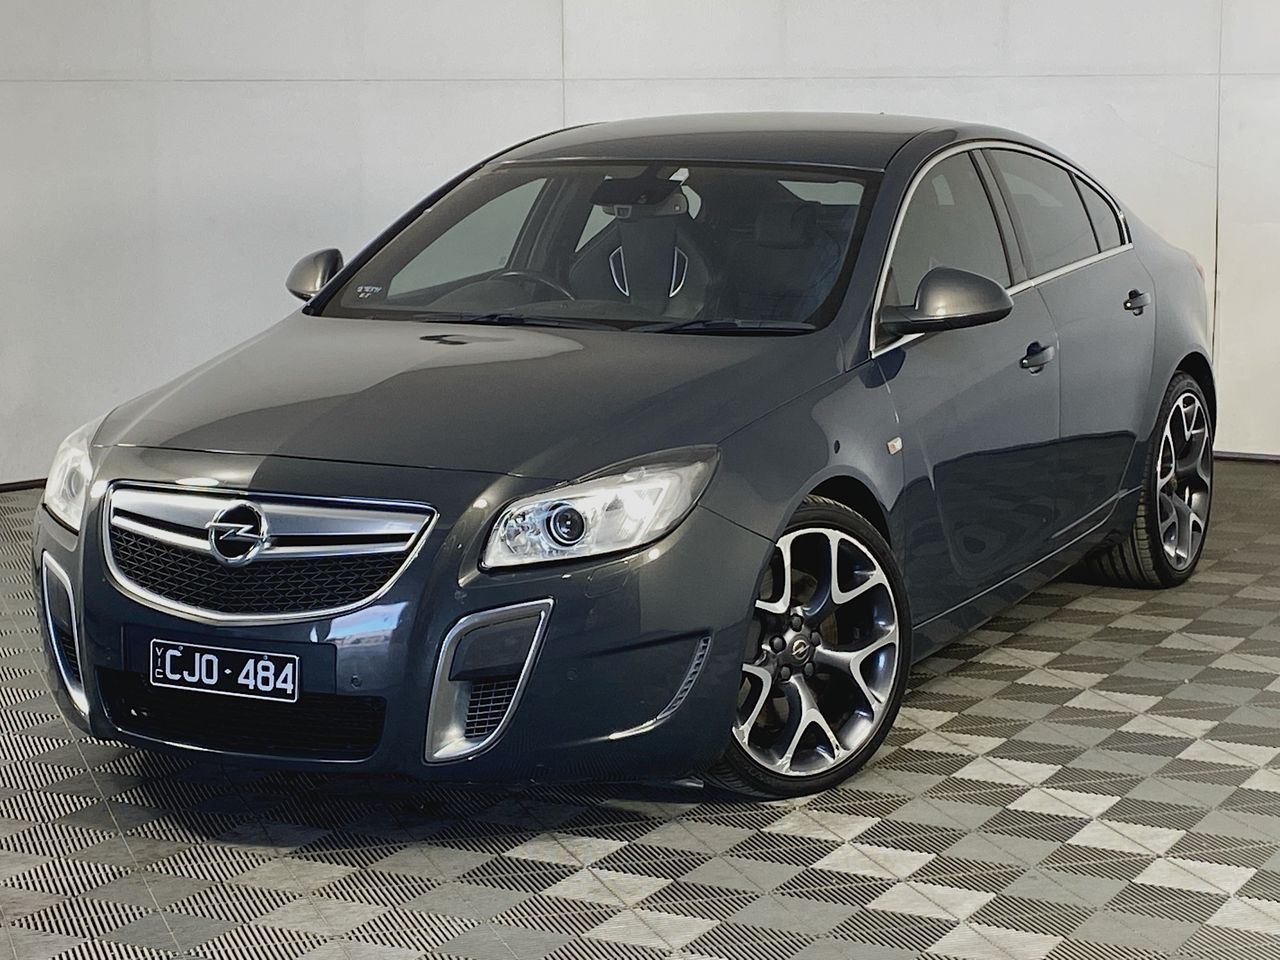 2013 Opel Insignia OPC GA Automatic Sedan Auction (0001